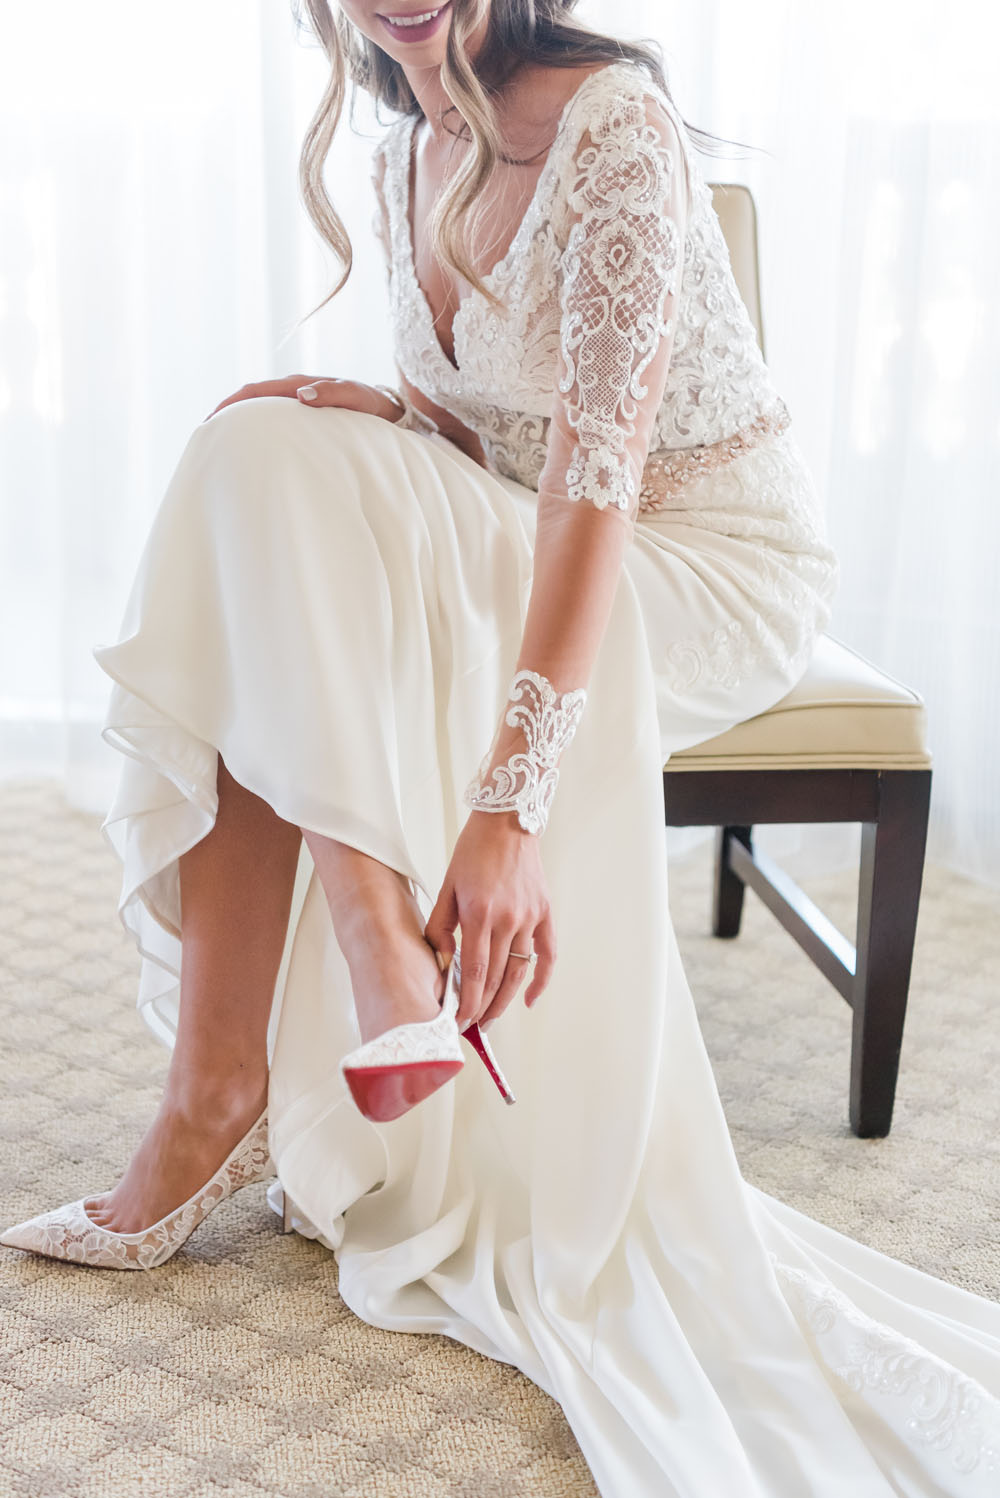 JW Marriott Las Vegas Wedding | Kristen Marie Weddings + Portraits